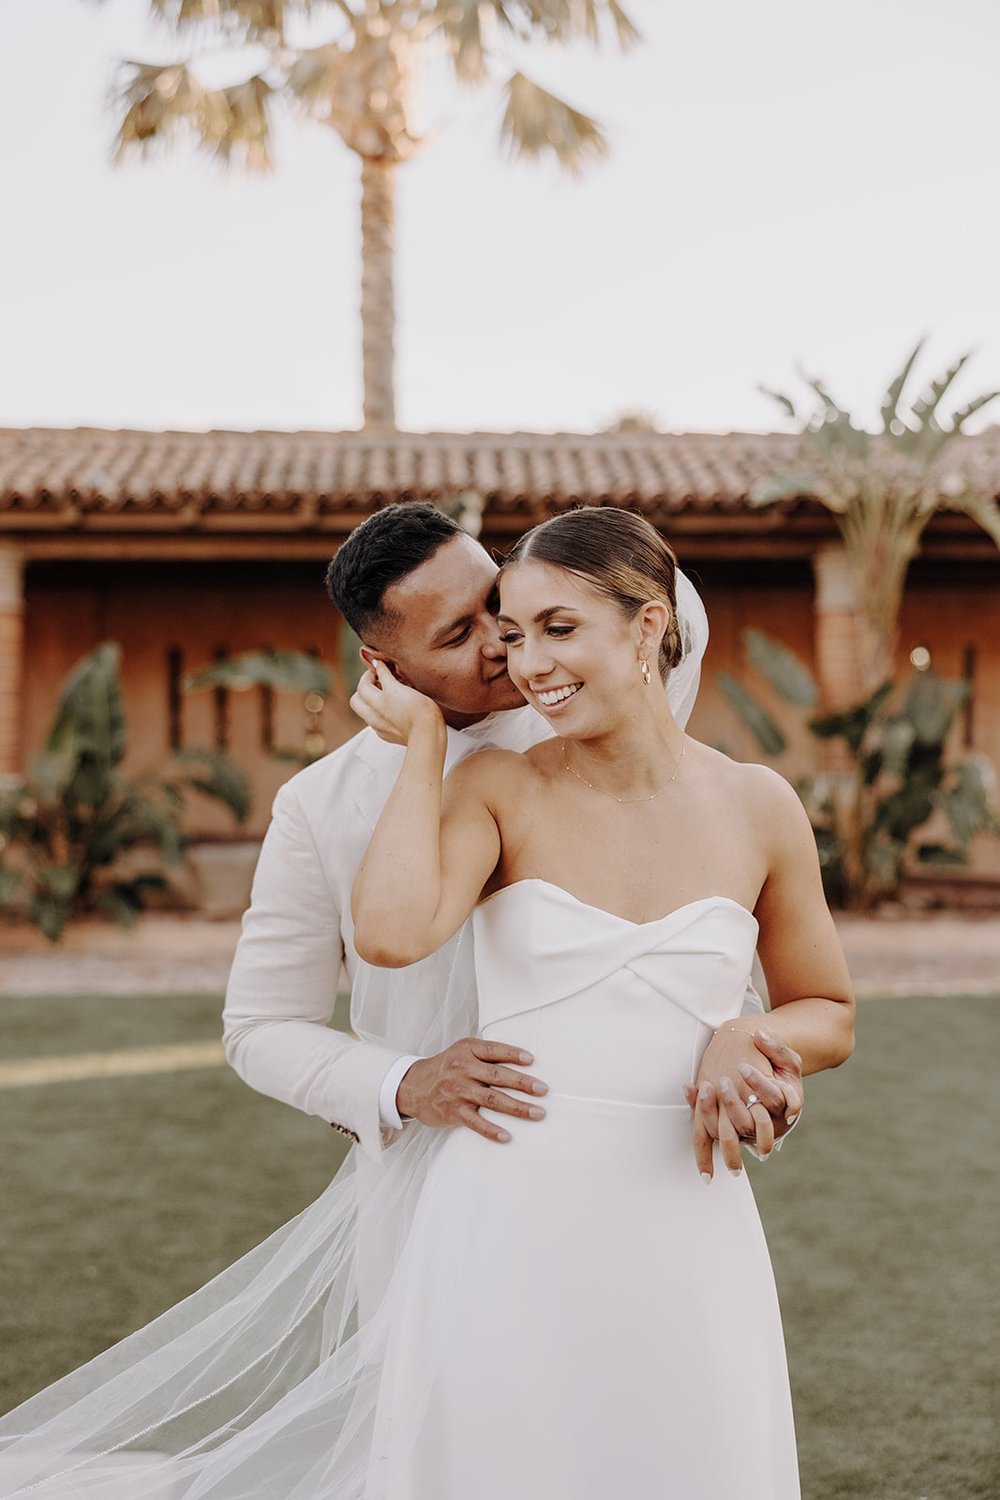 Bride and groom couple photos at luxury resort wedding in Arizona